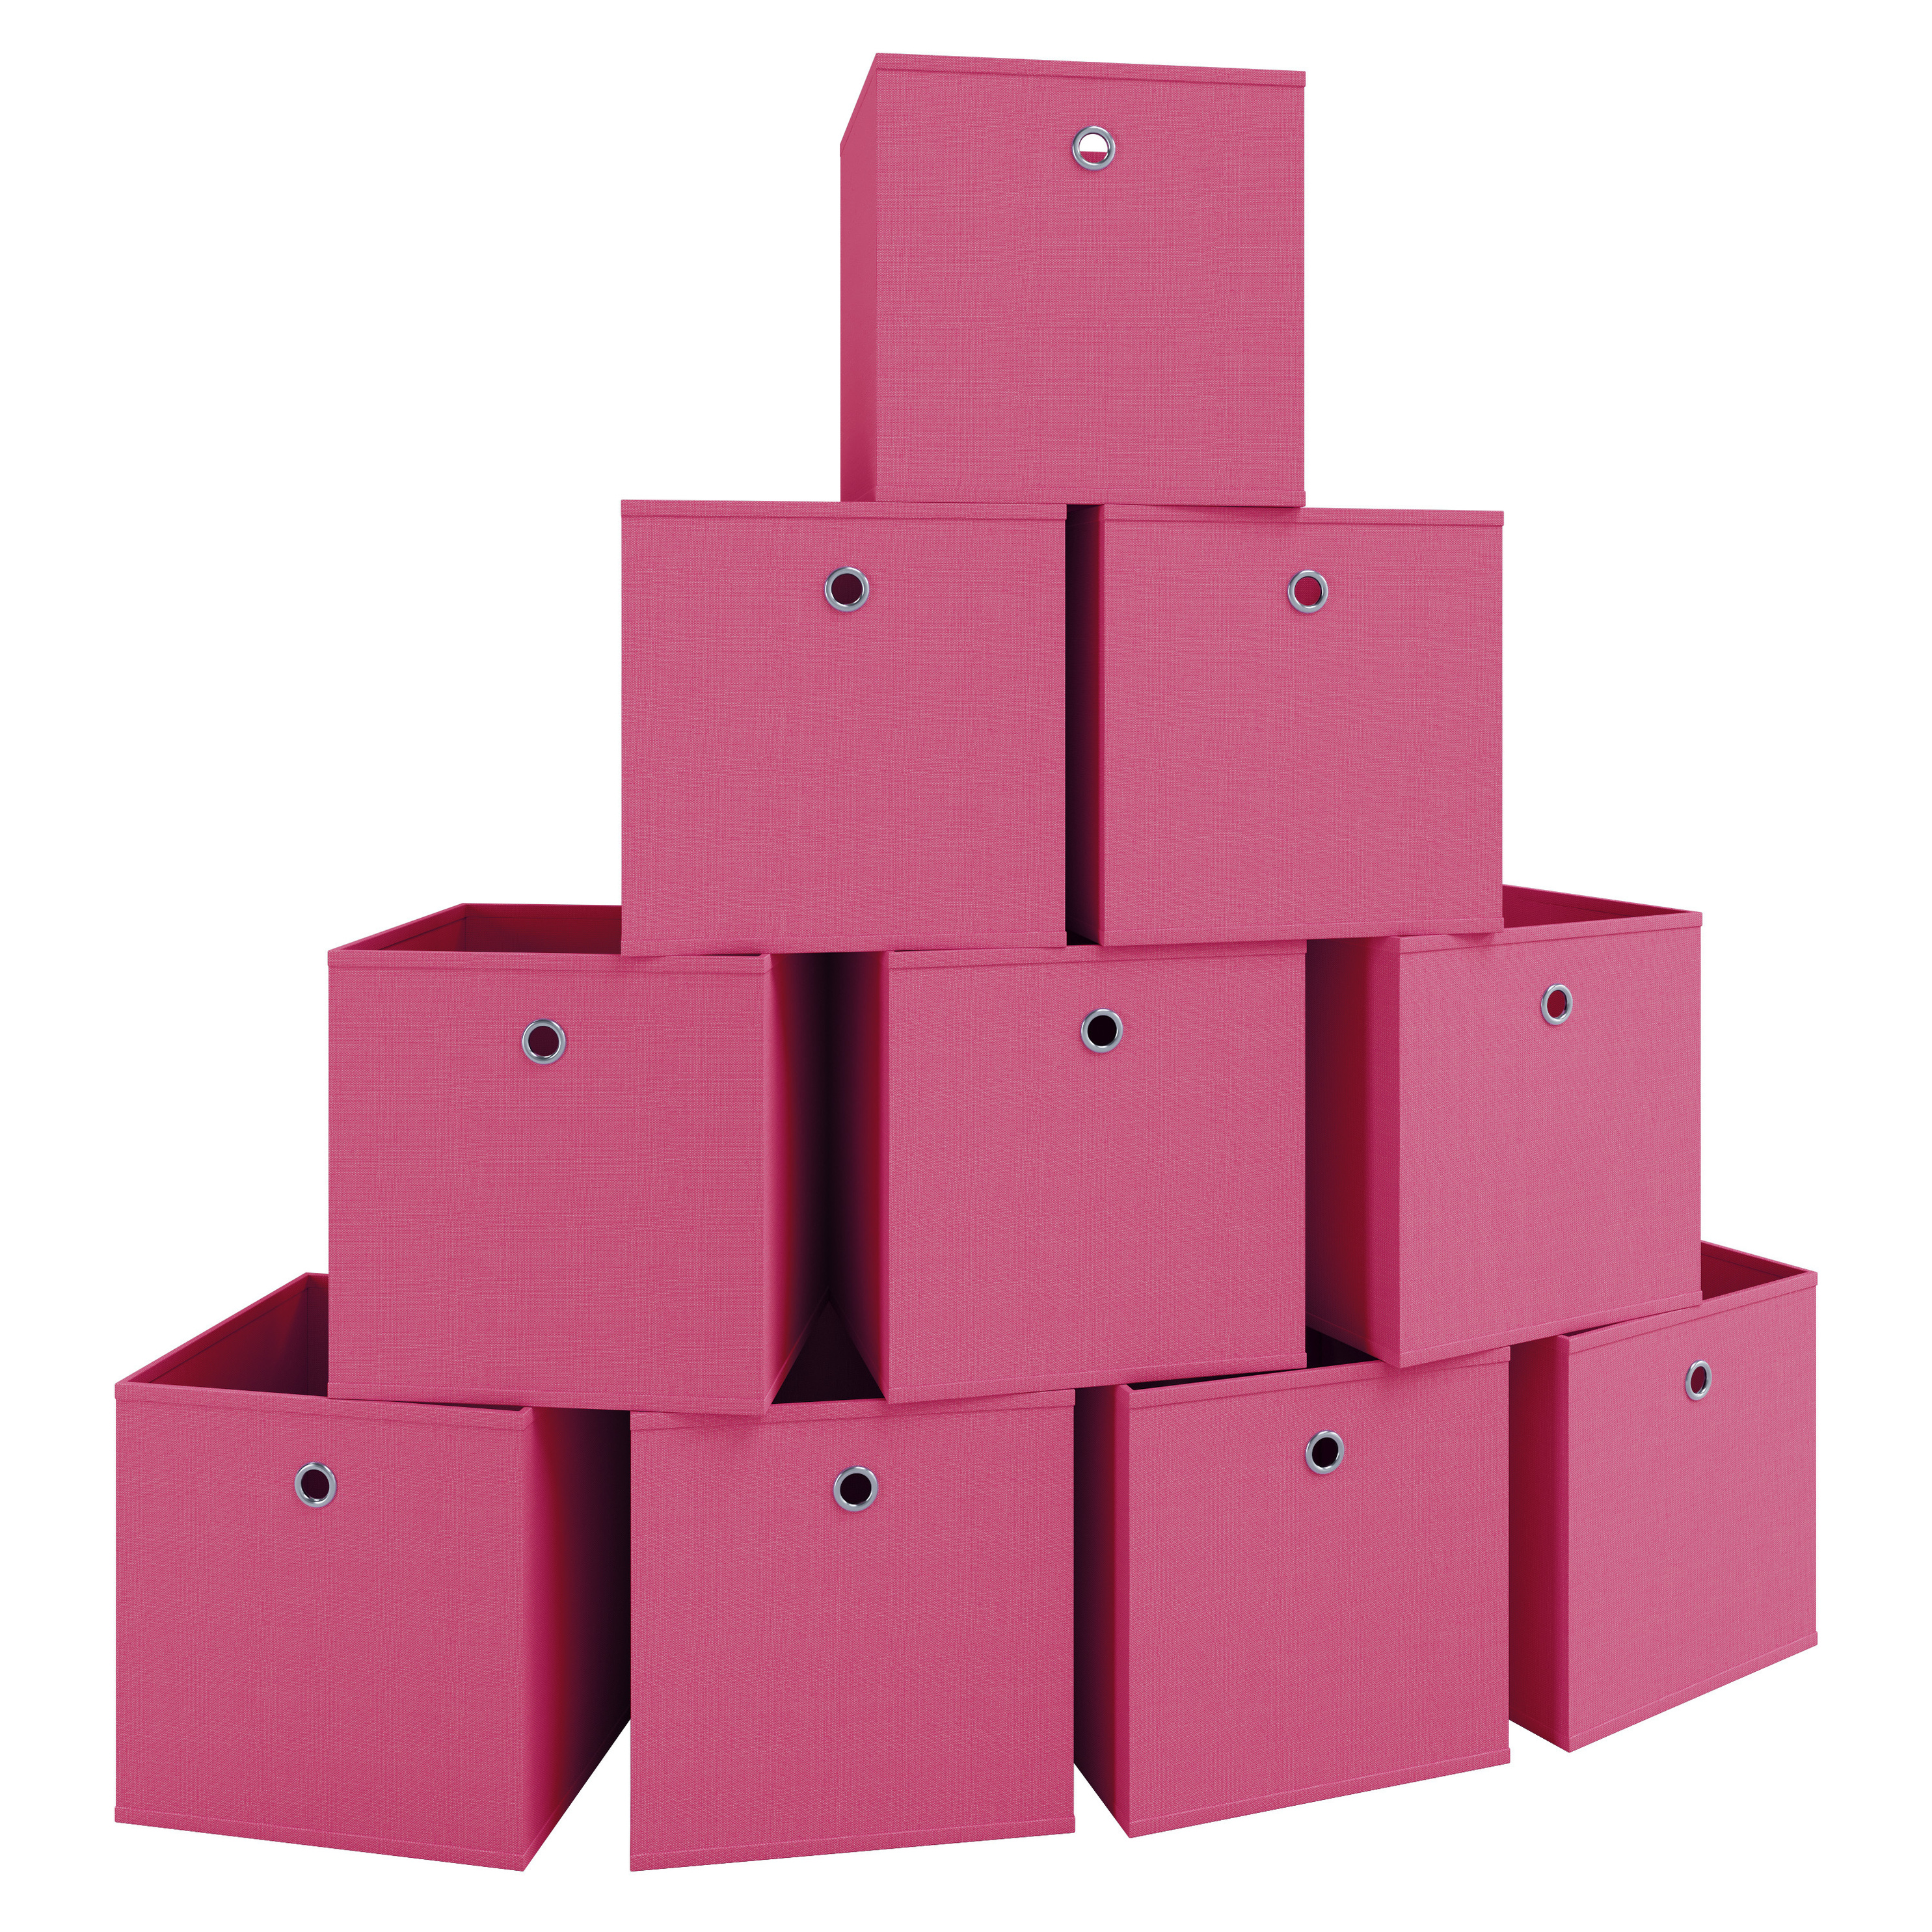 VCM 10er Set Stoff Faltbox Klappbox Boxas Farbe: Pink